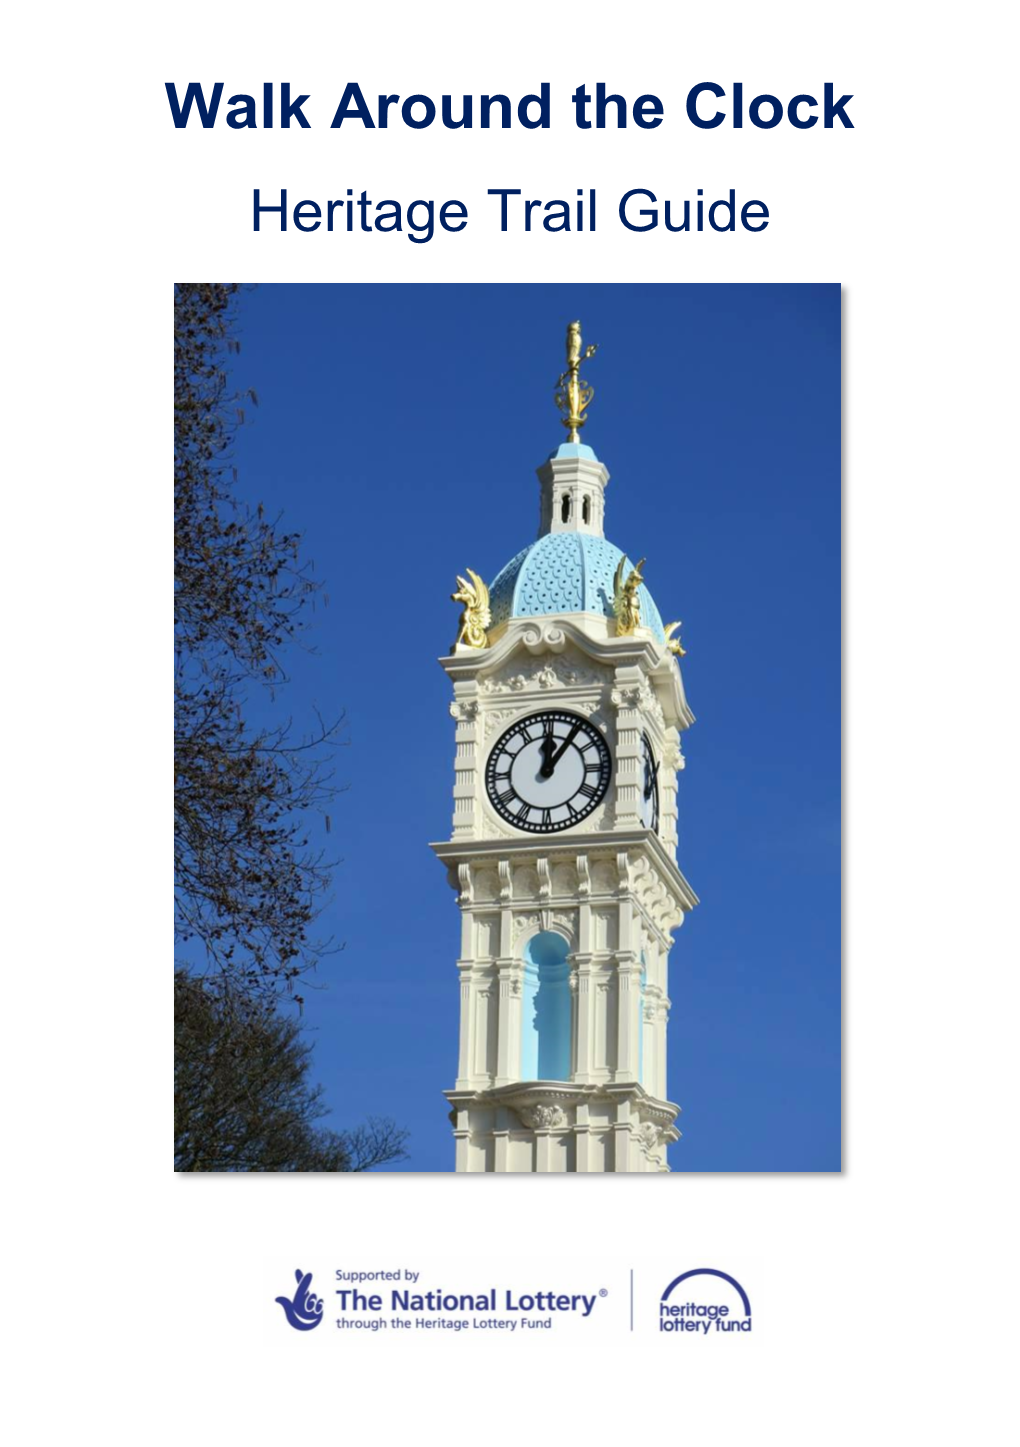 Walk Around the Clock Heritage Trail Guide